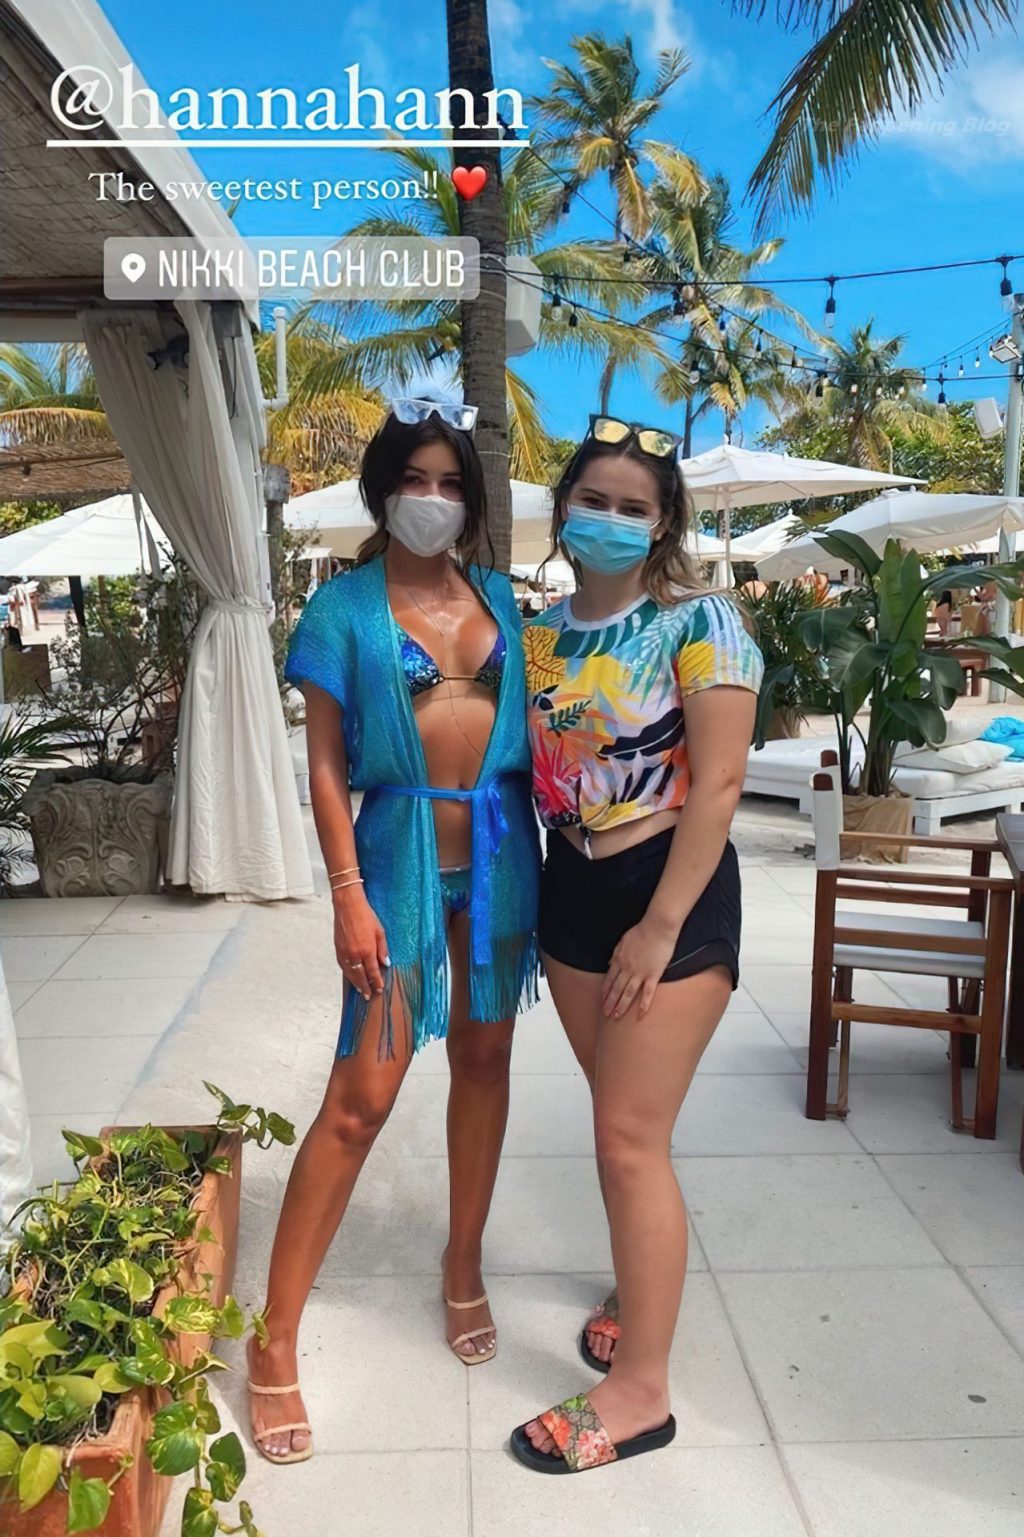 Hannah Ann Sluss Displays Her Sexy Bikini Body in Miami (72 Photos)